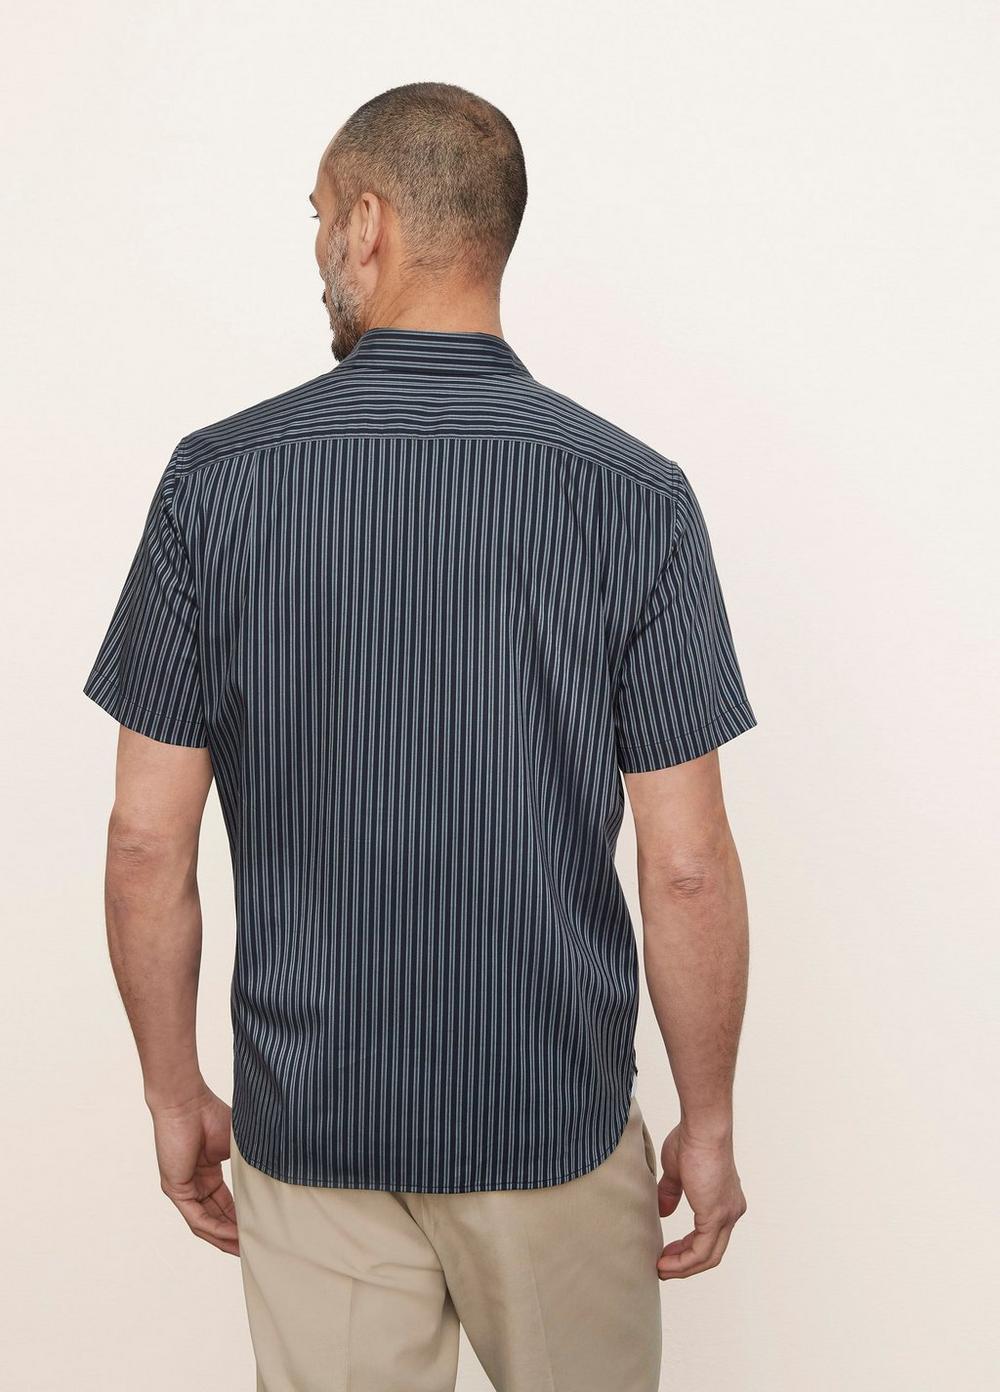 Claremont Stripe Short Sleeve Shirt